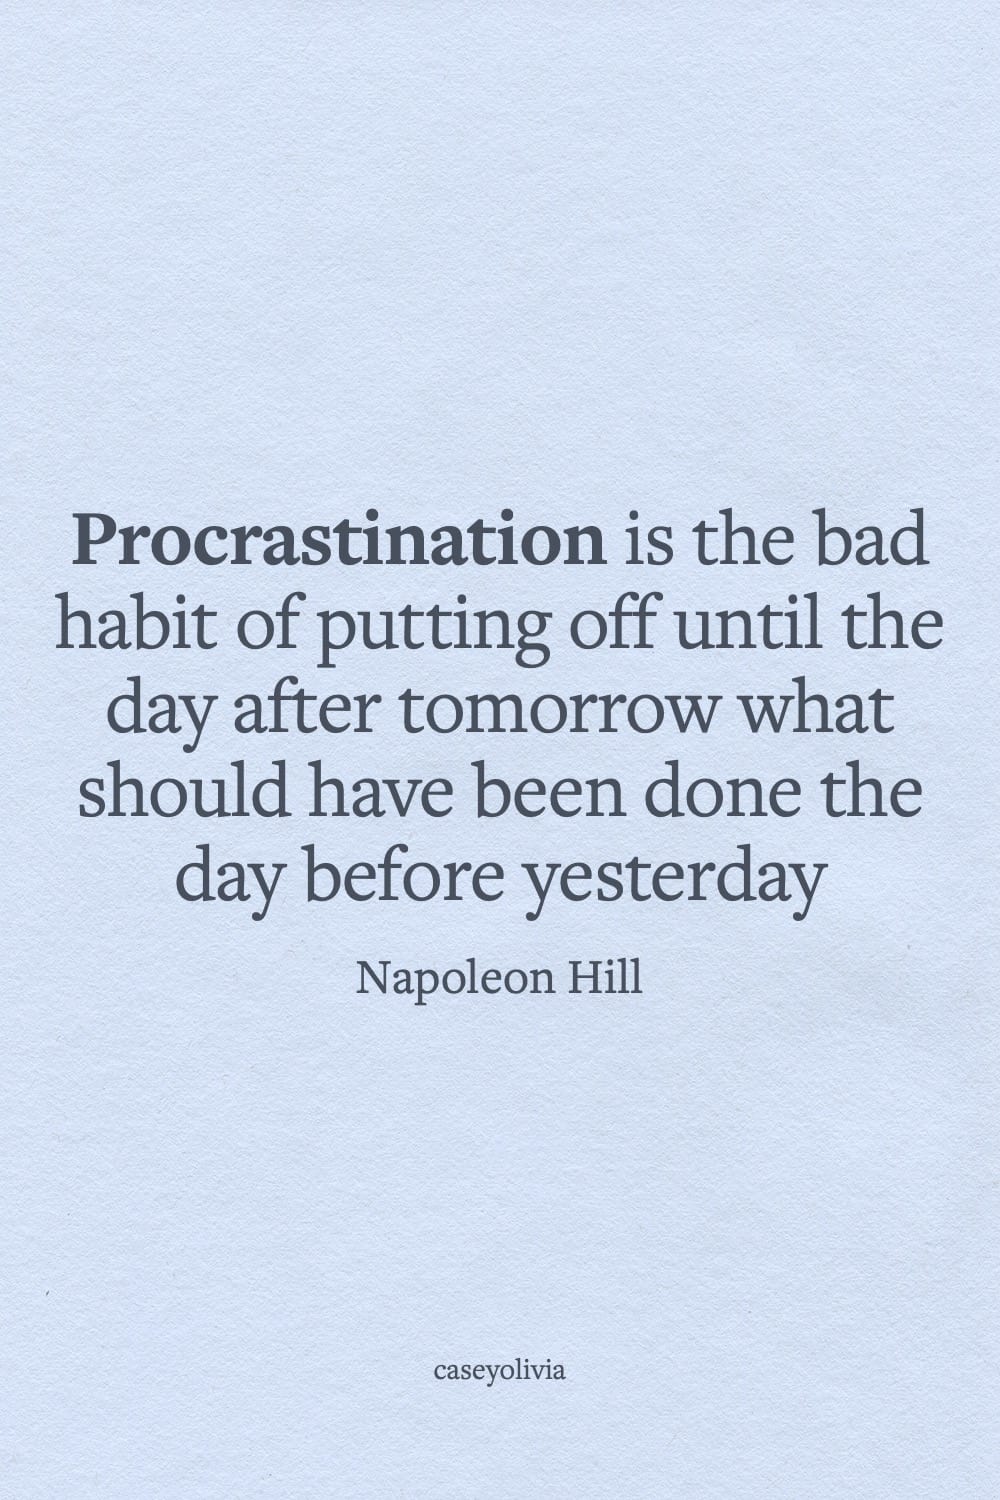 napoleon hill overcoming procastination mindset saying